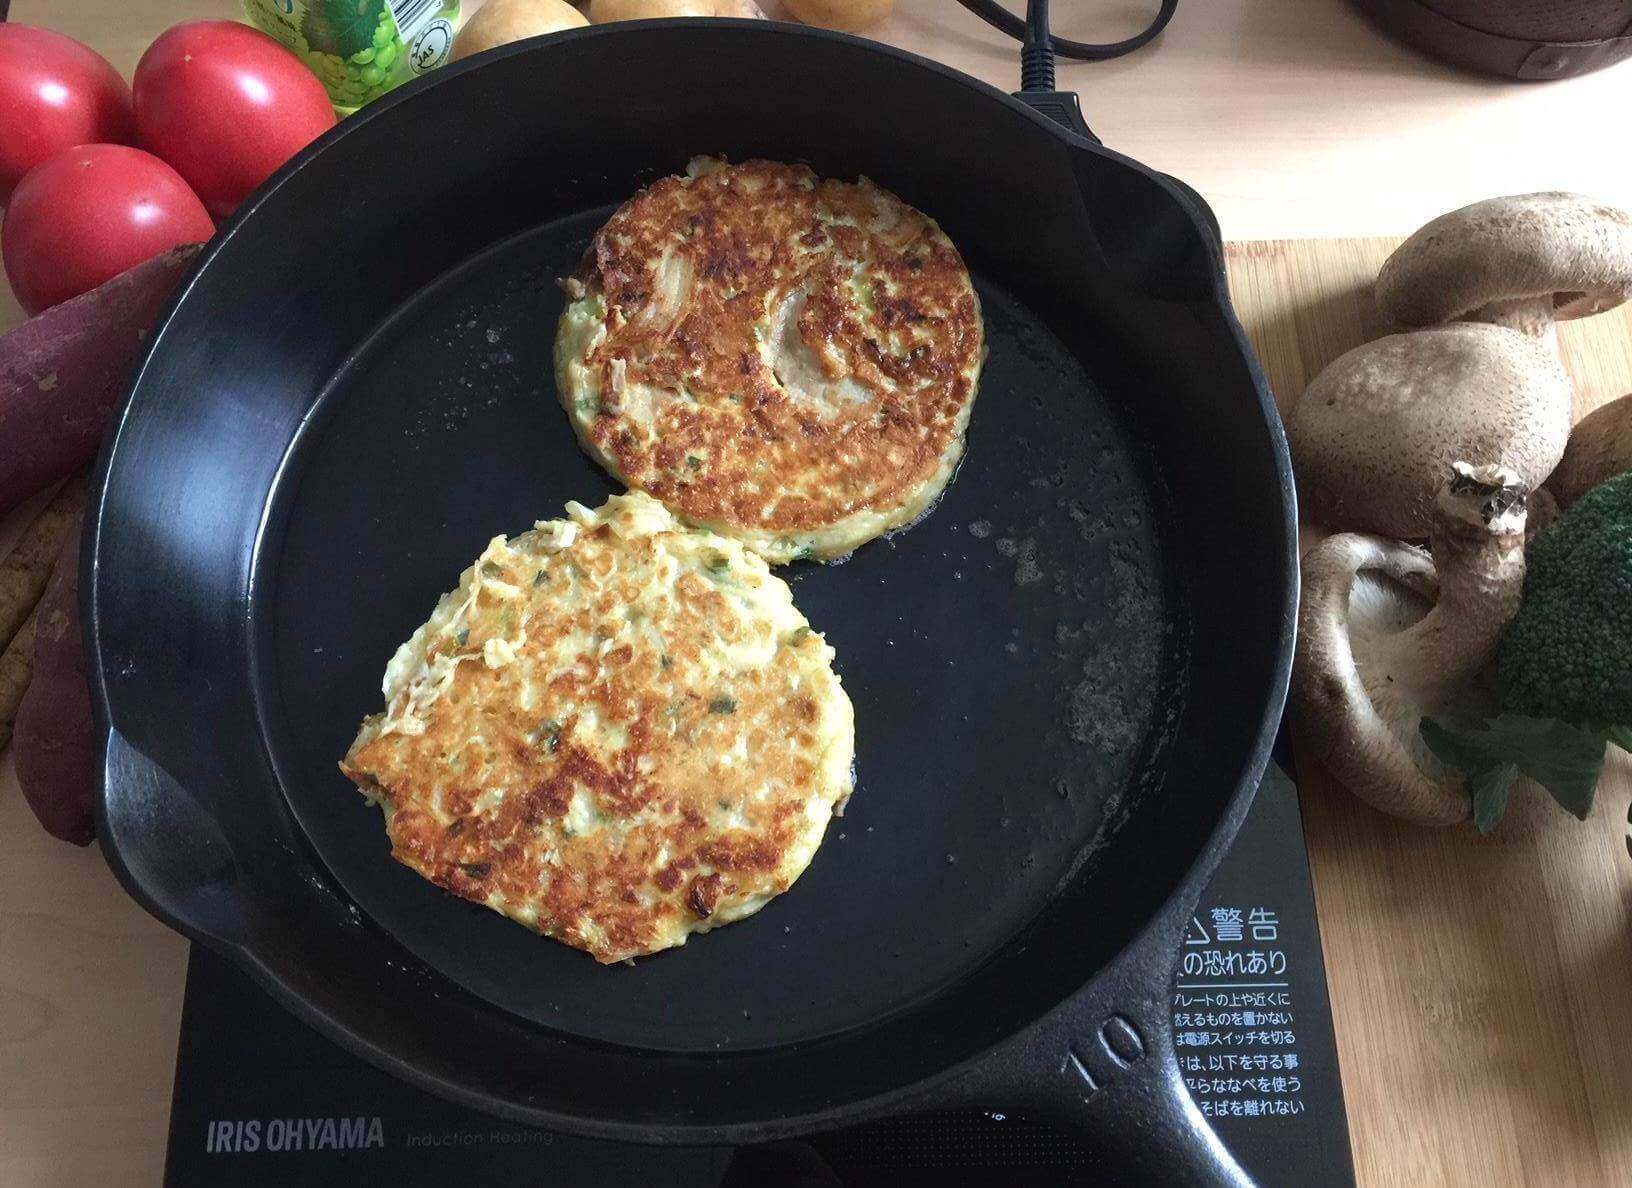 https://www.booniehicks.com/wp-content/uploads/2018/10/Cooking-Okonomiyaki-in-Wagner-cast-iron.jpg